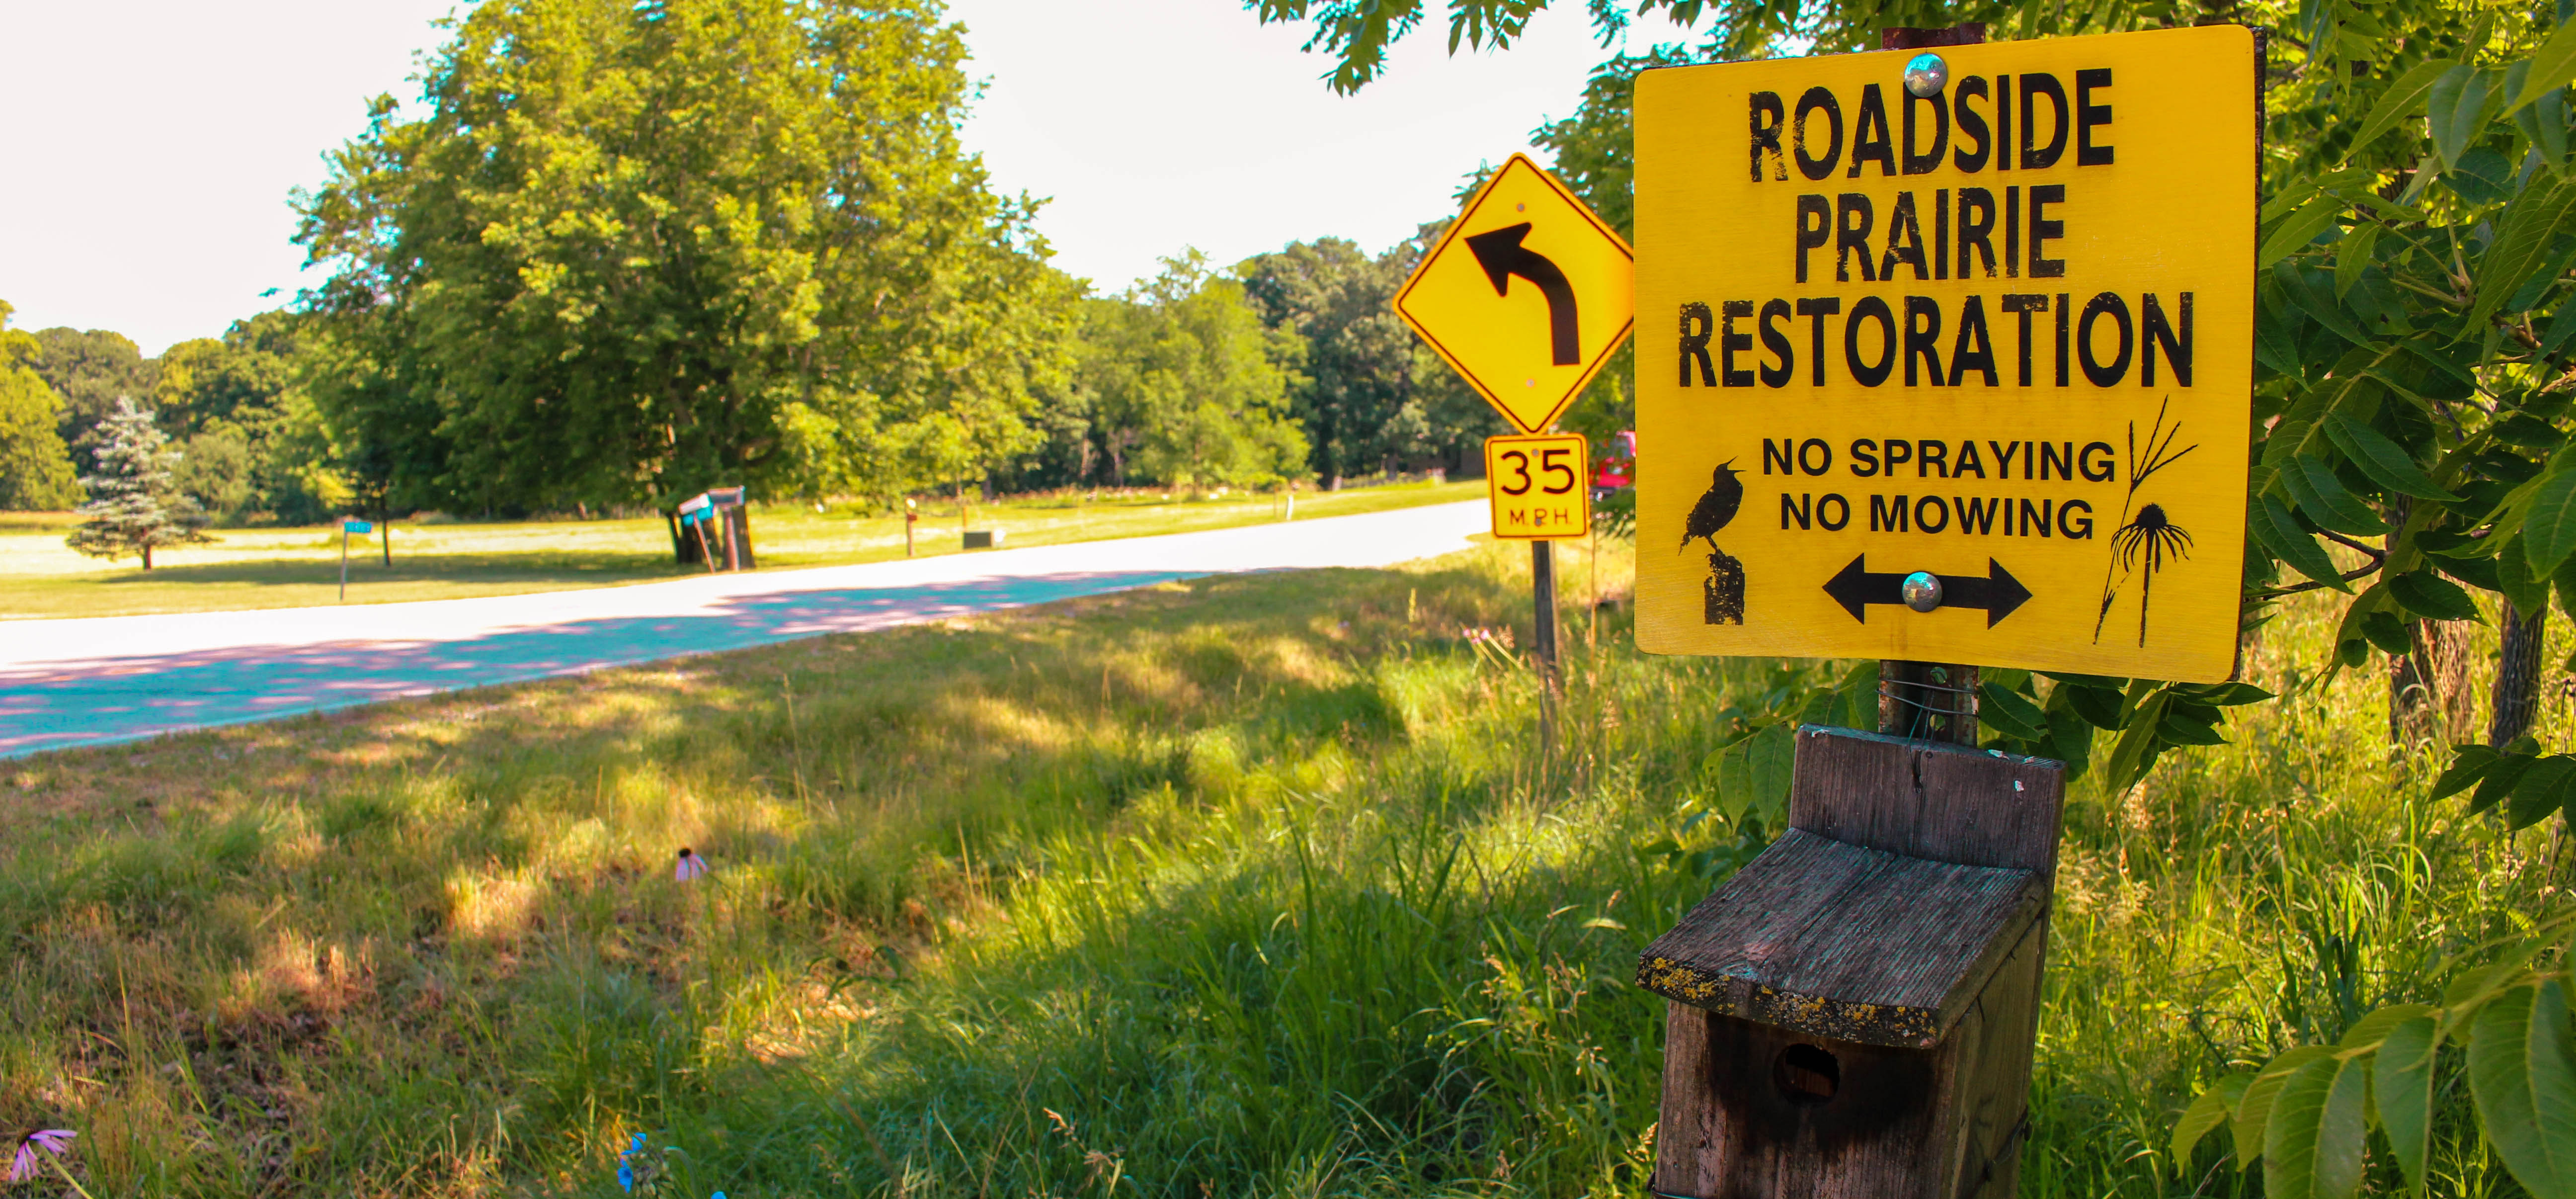 A sign reading "Roadside prairie restoration, no spraying or mowing" among greed roadside vegetation.